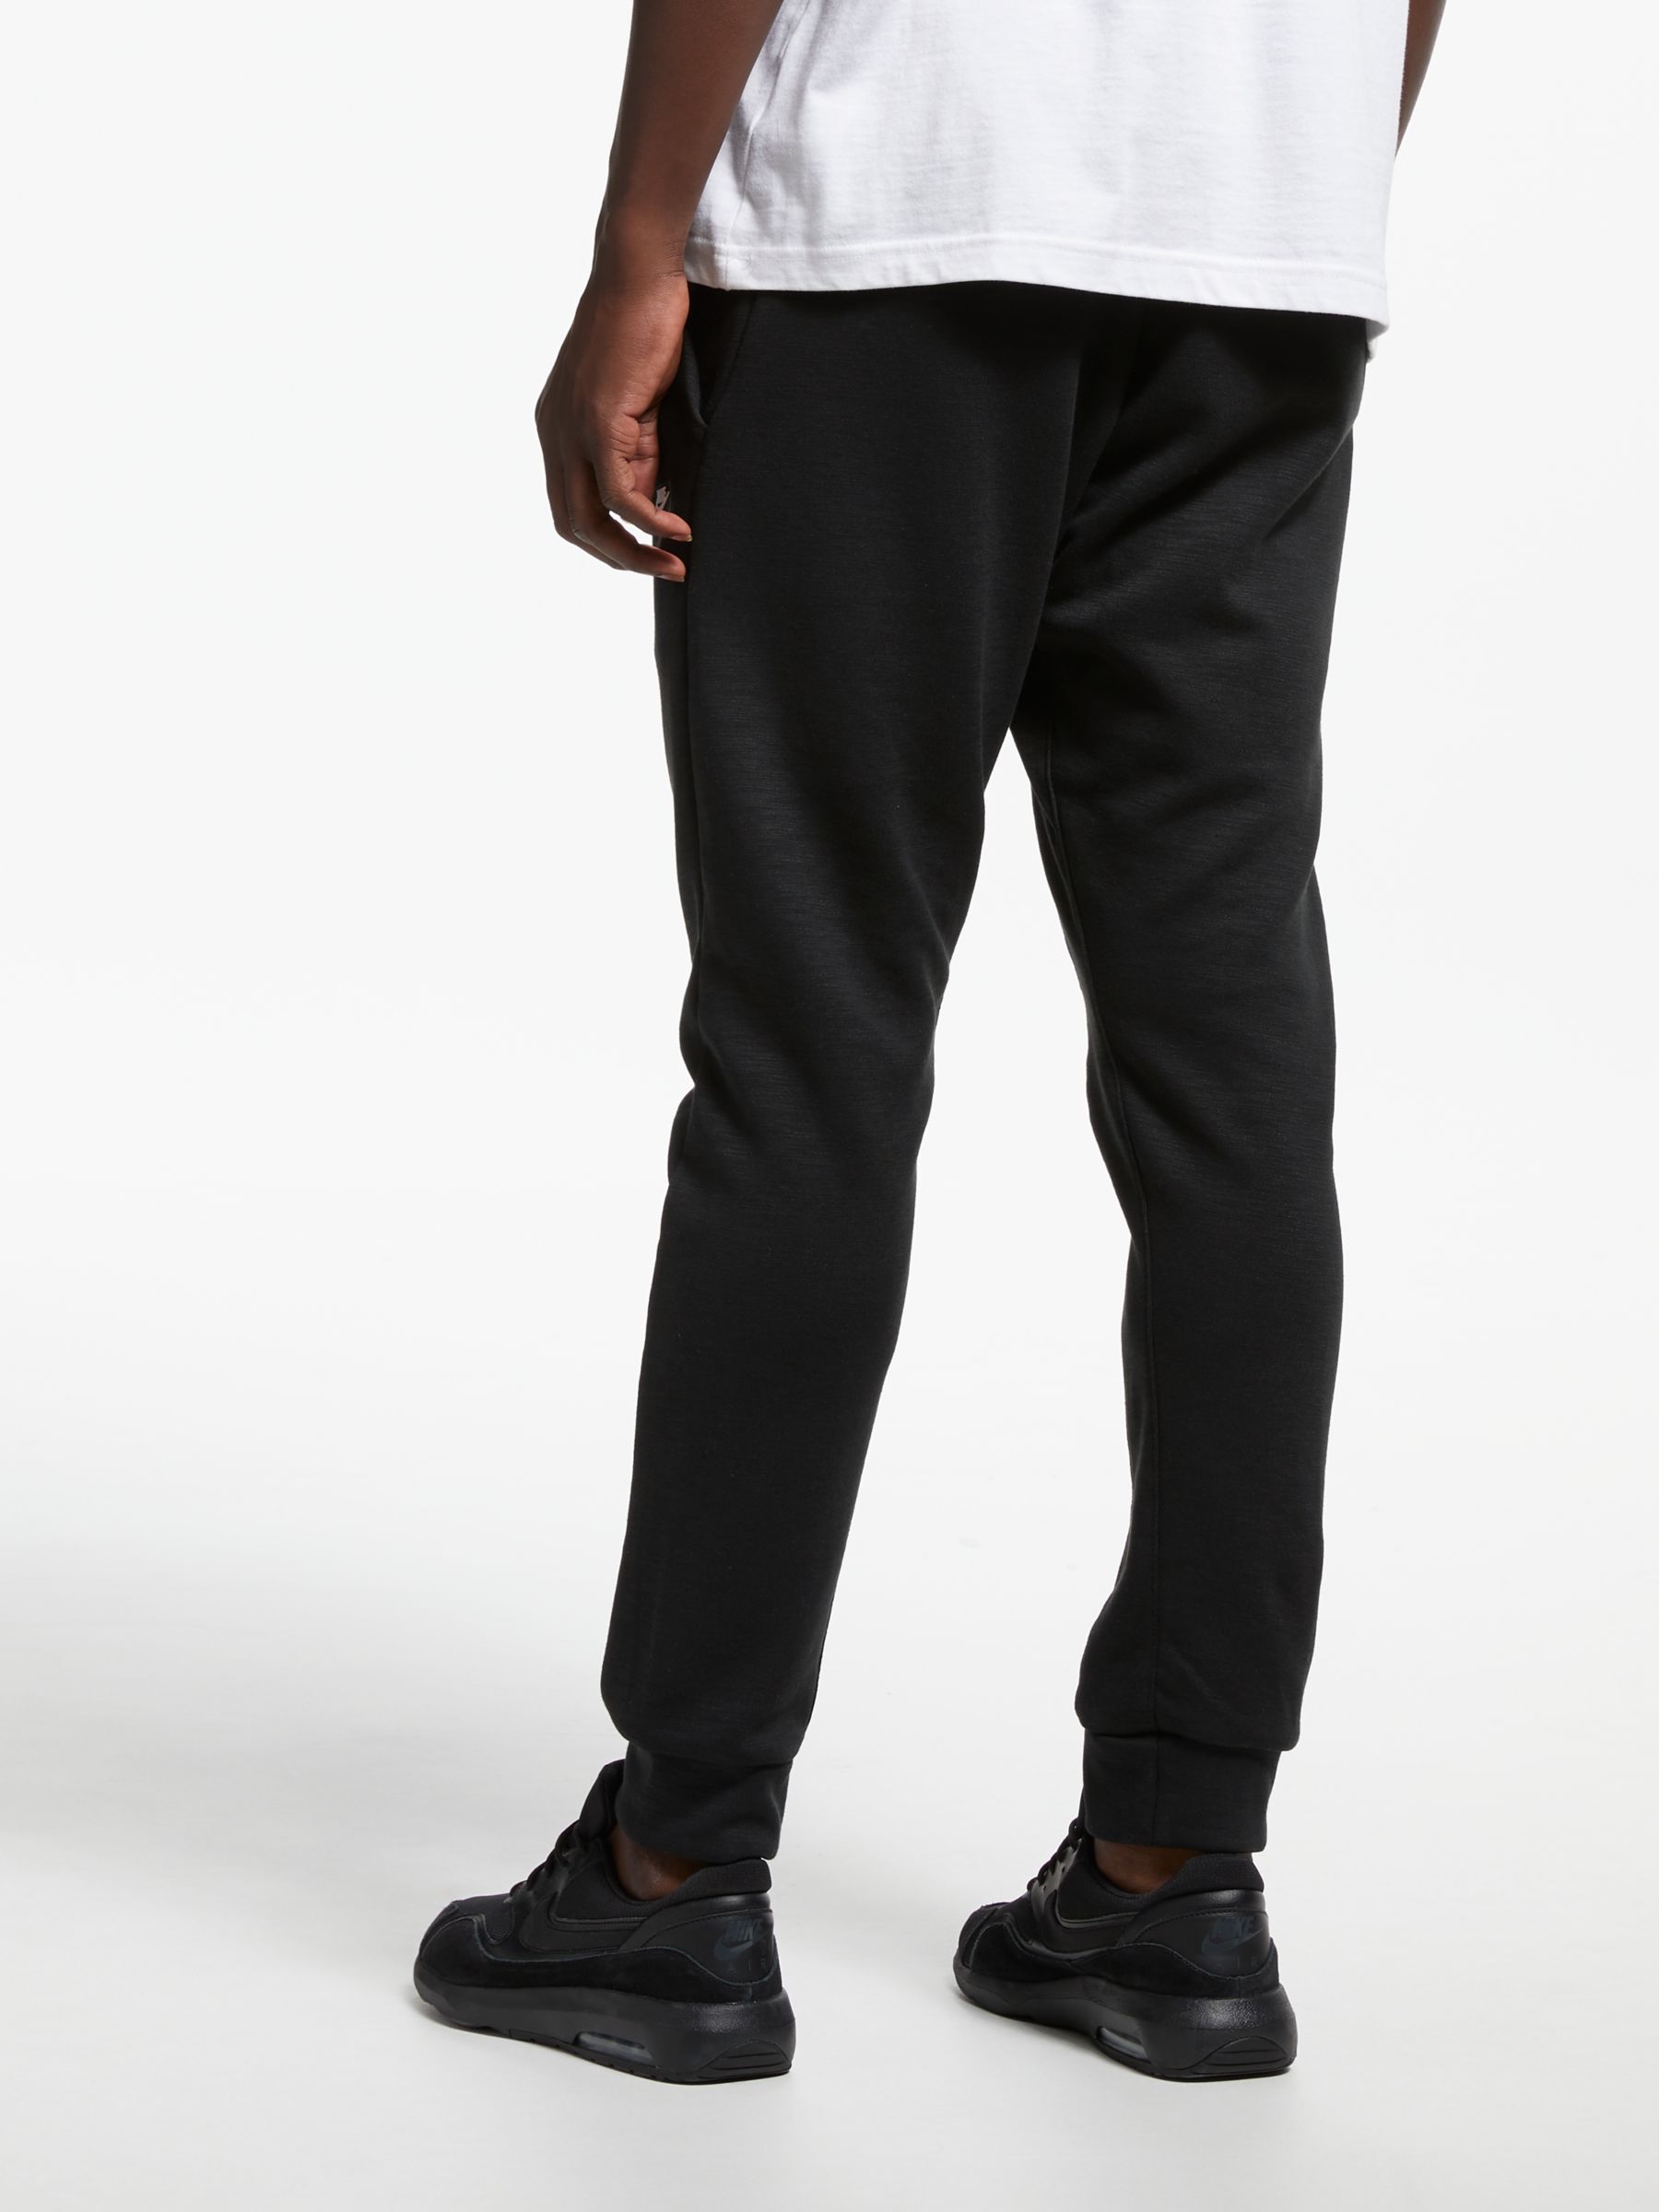 Nike Sportswear Optic Tracksuit Bottoms, Black at John Lewis & Partners